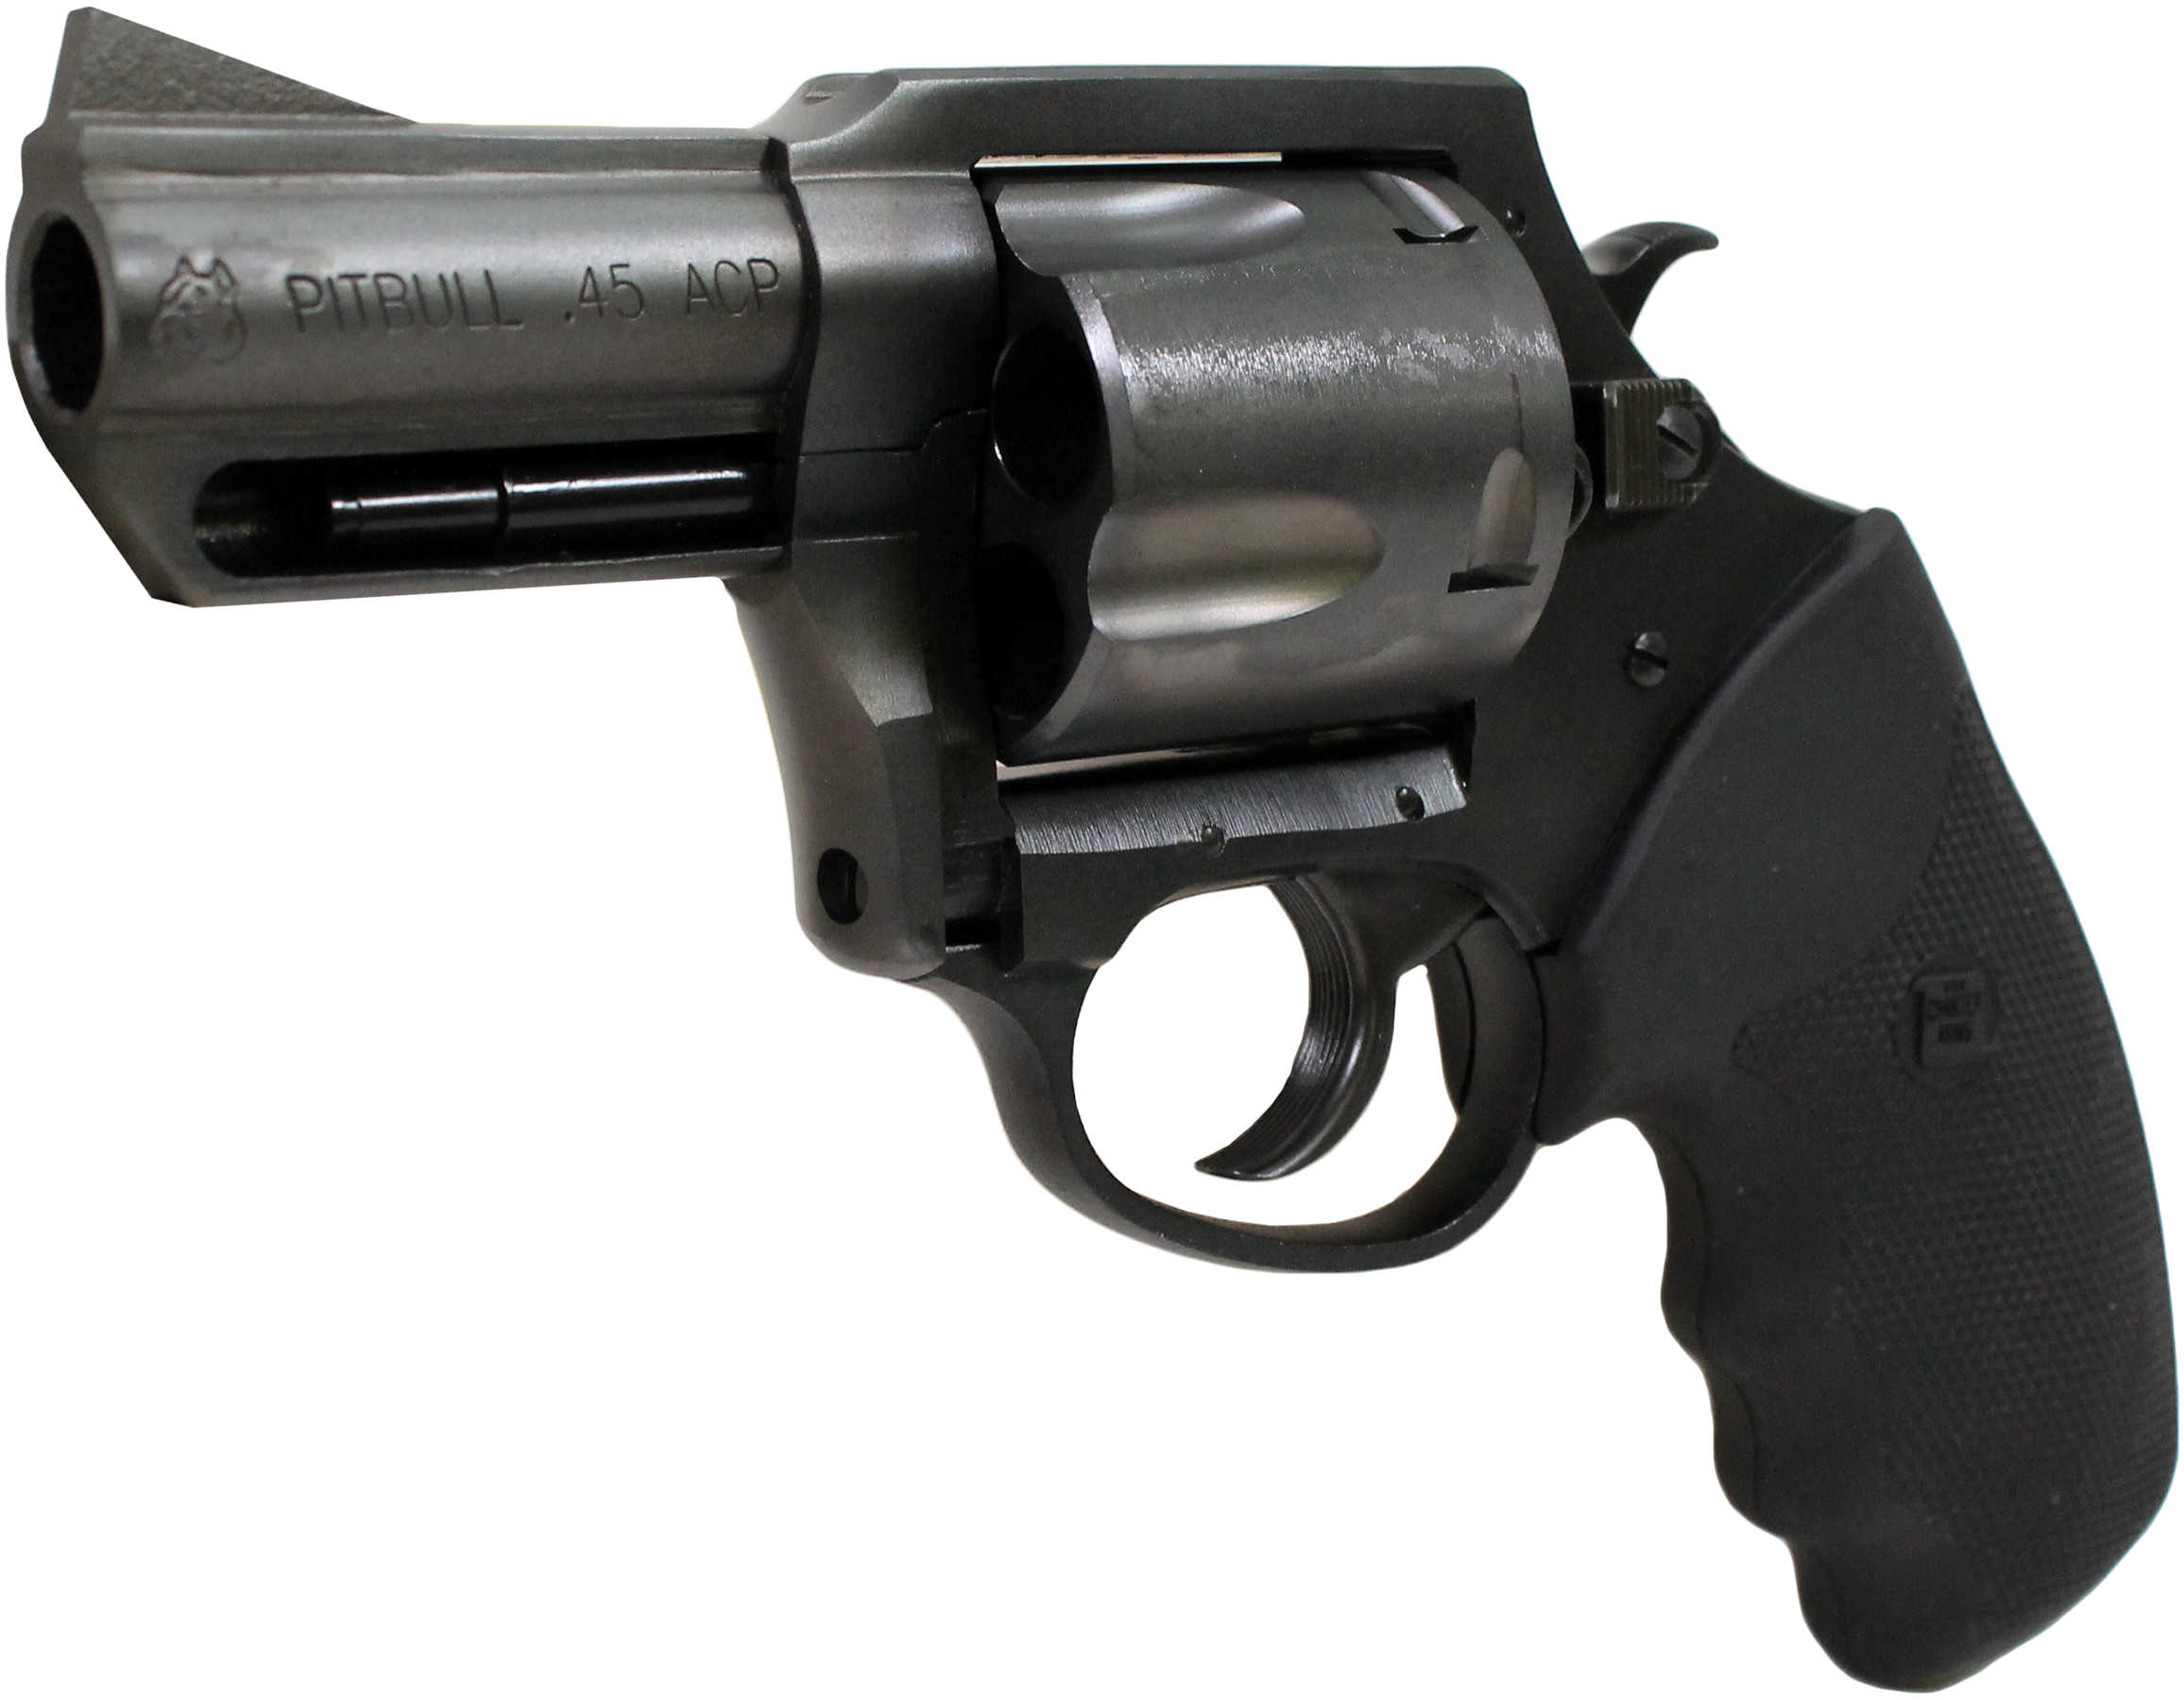 Charter Arms Pit Bull 45 ACP 2.5" Barrel Nitride Finish Revolver 11178058